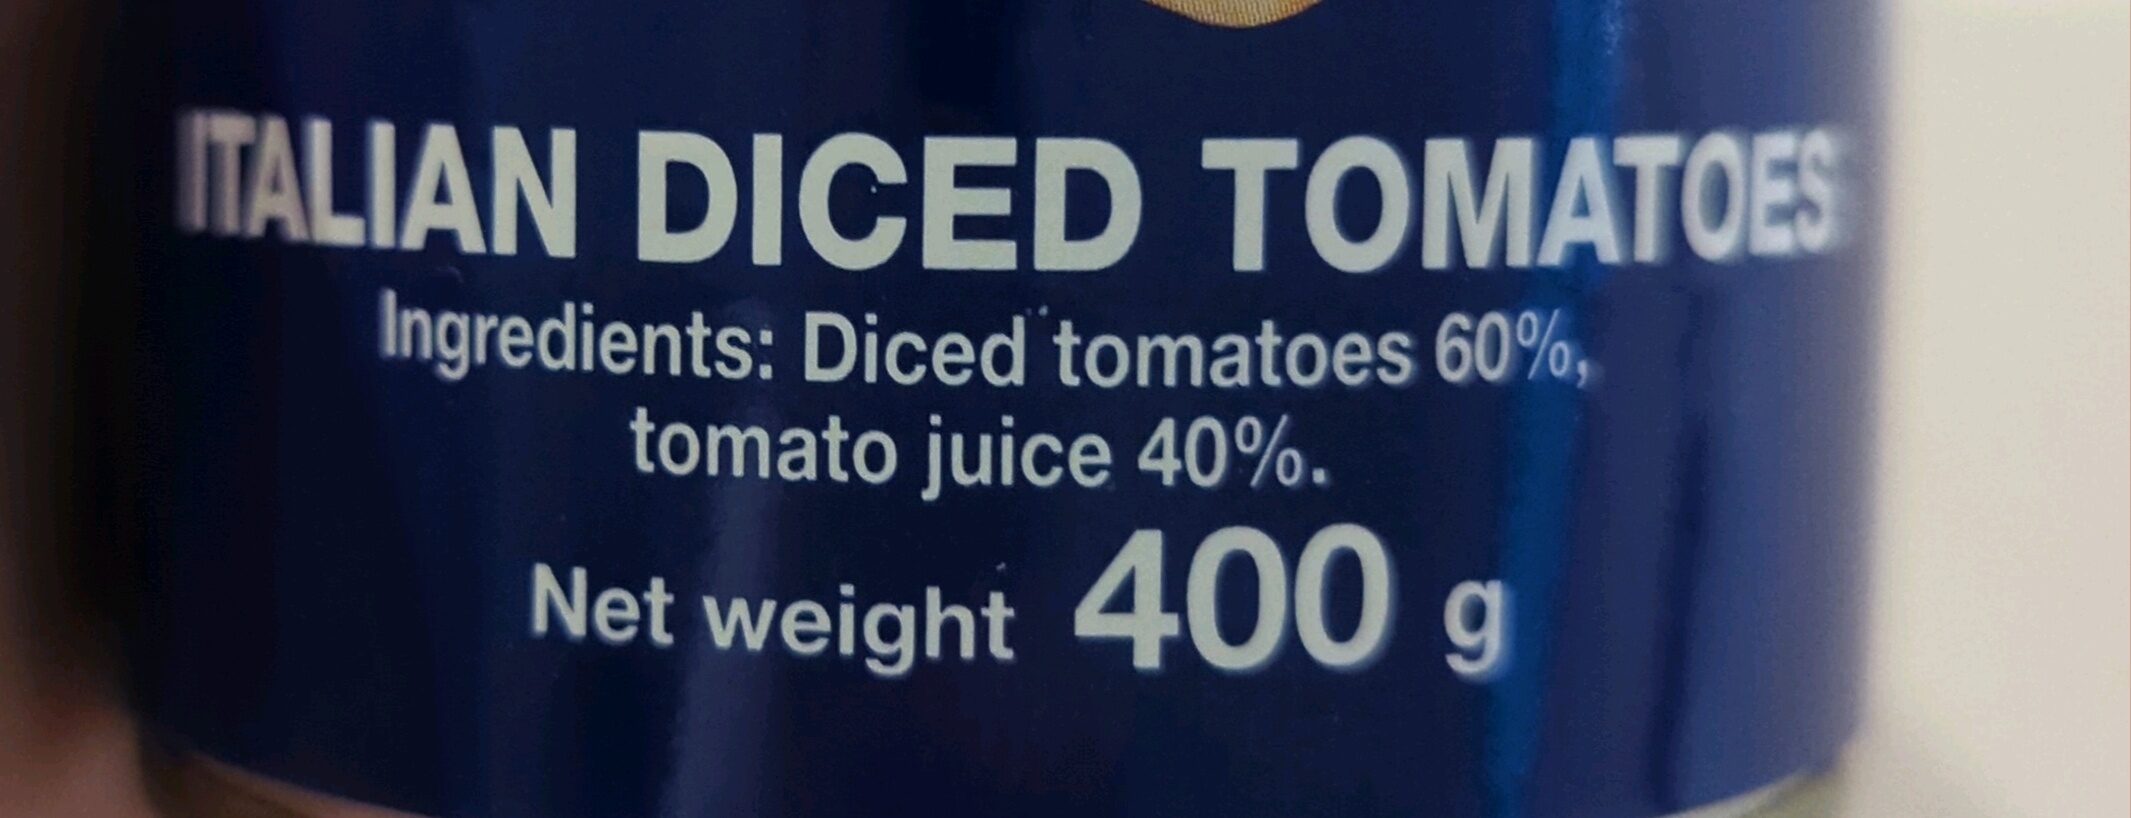 Italian diced tomato’s - Ingredients